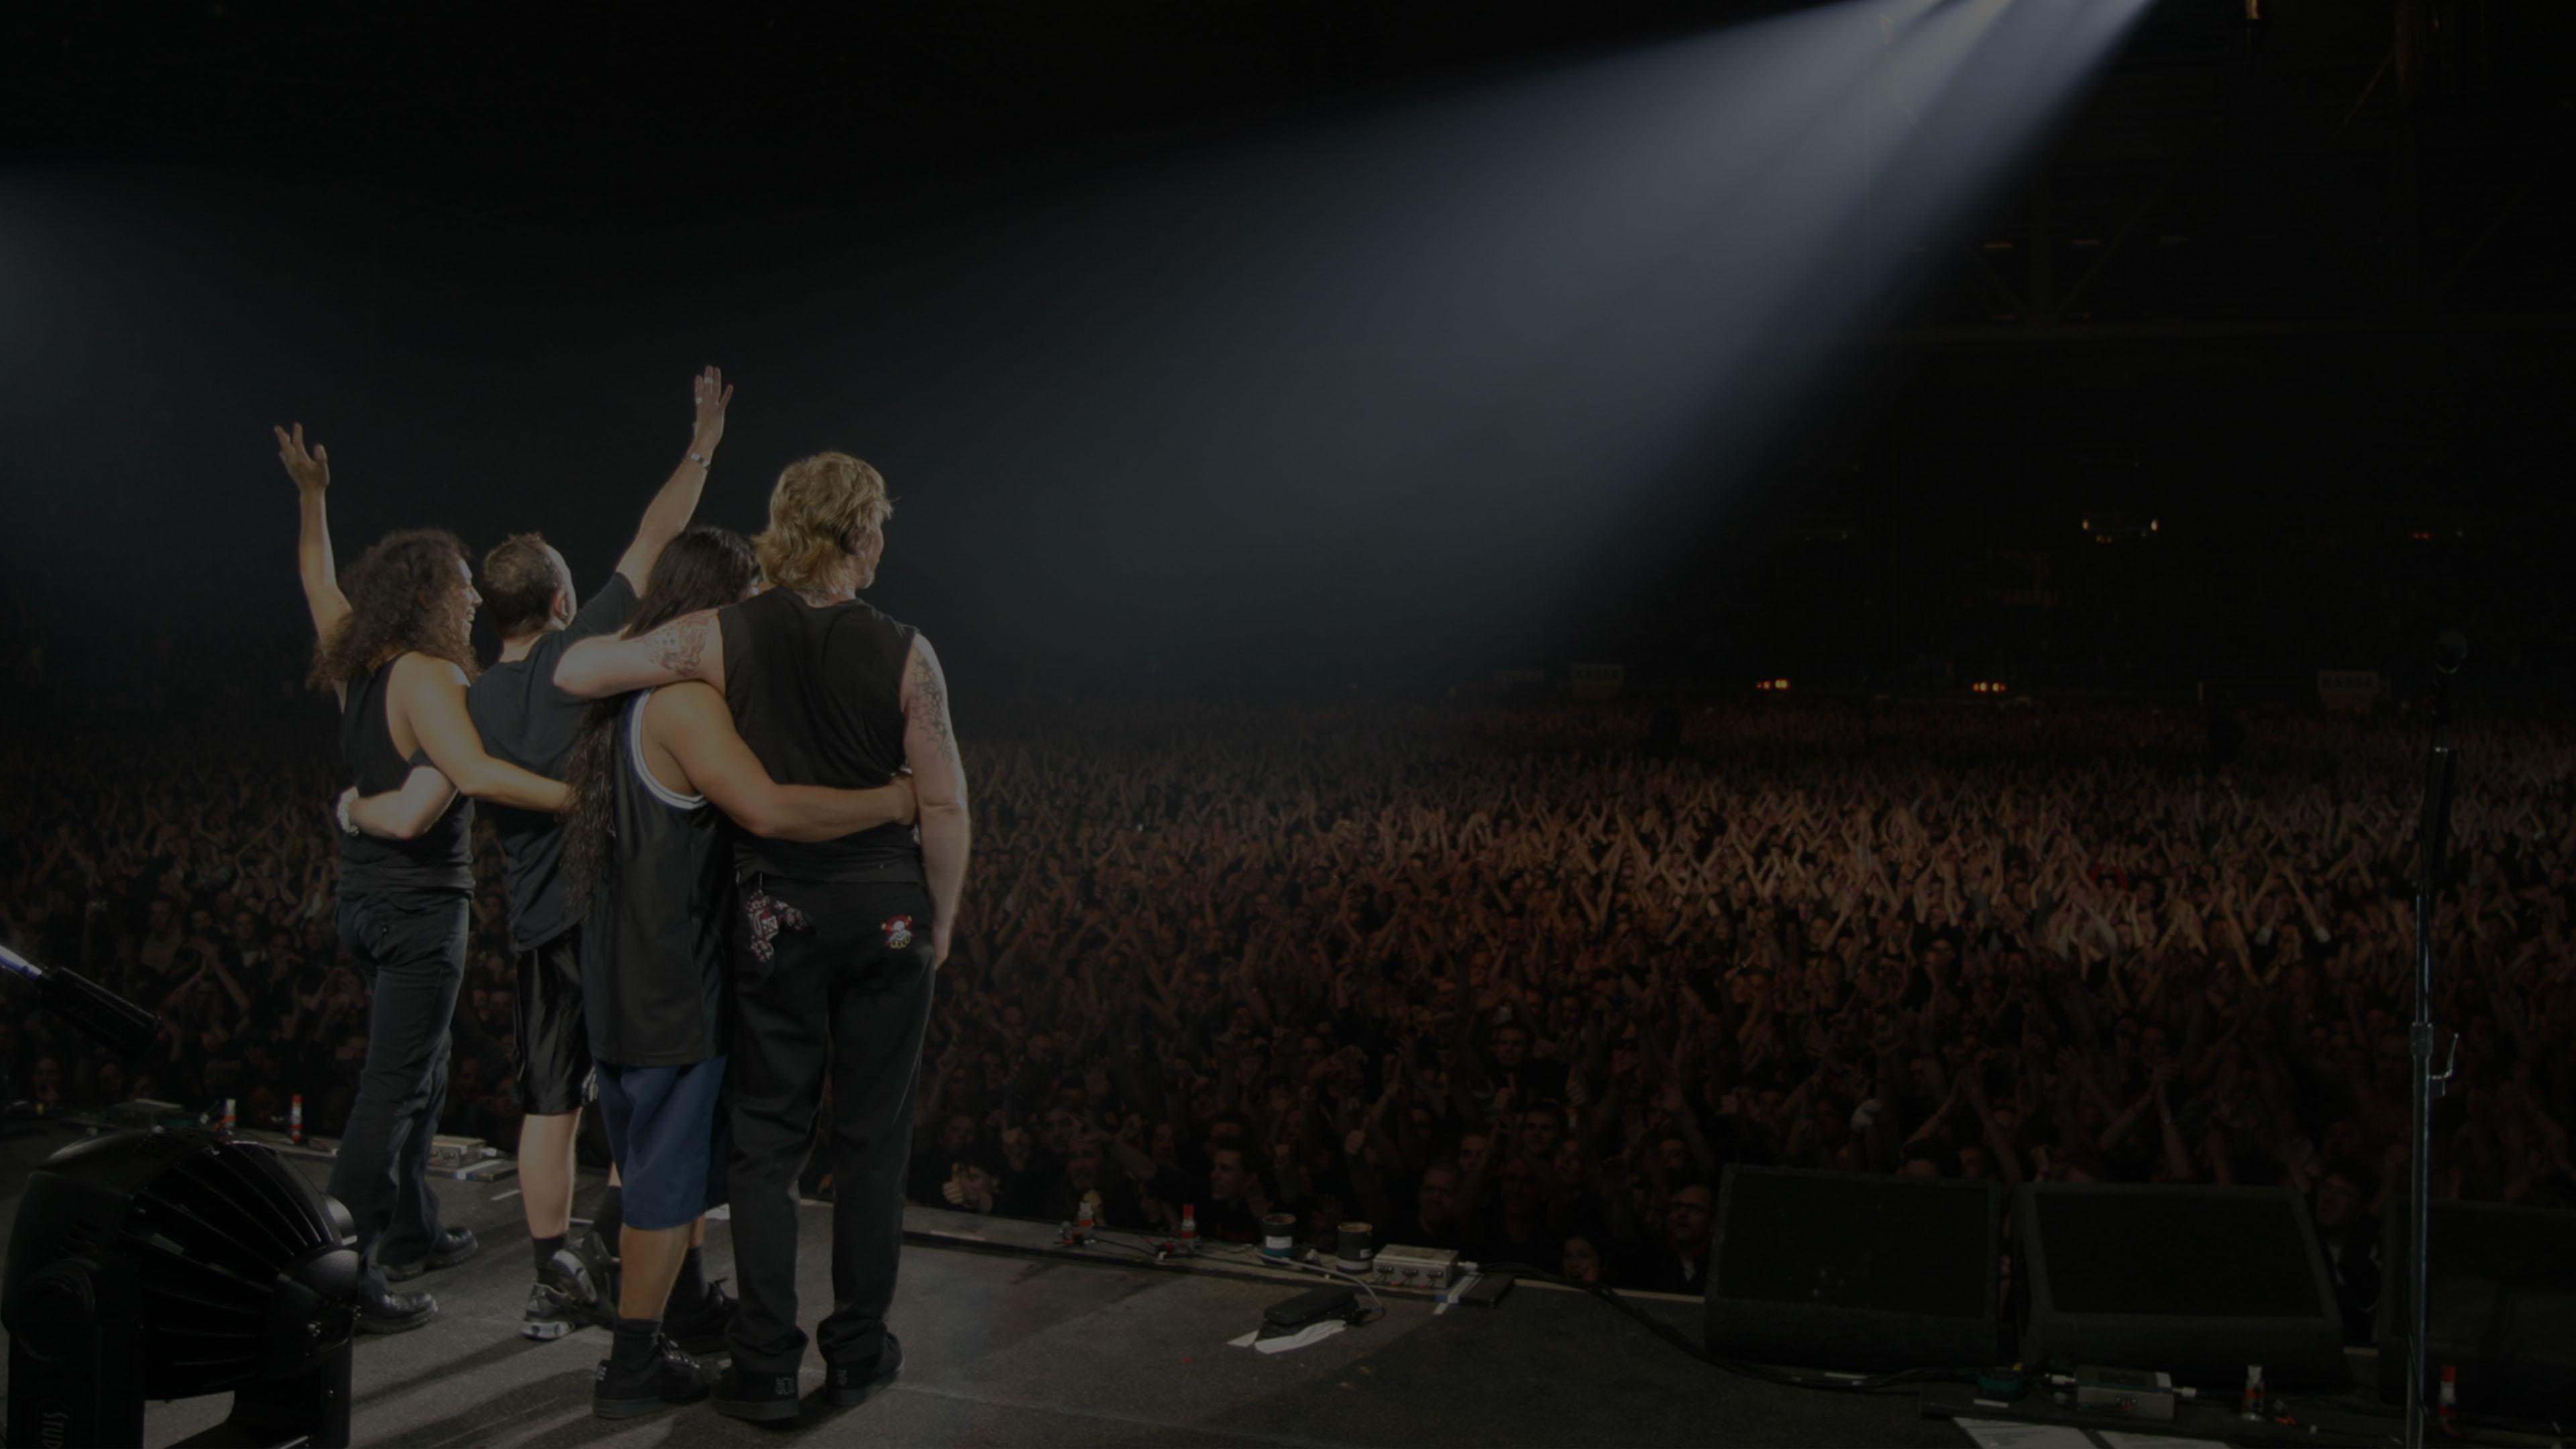 Metallica at Gelredome in Arnhem, Netherlands on December 6, 2003